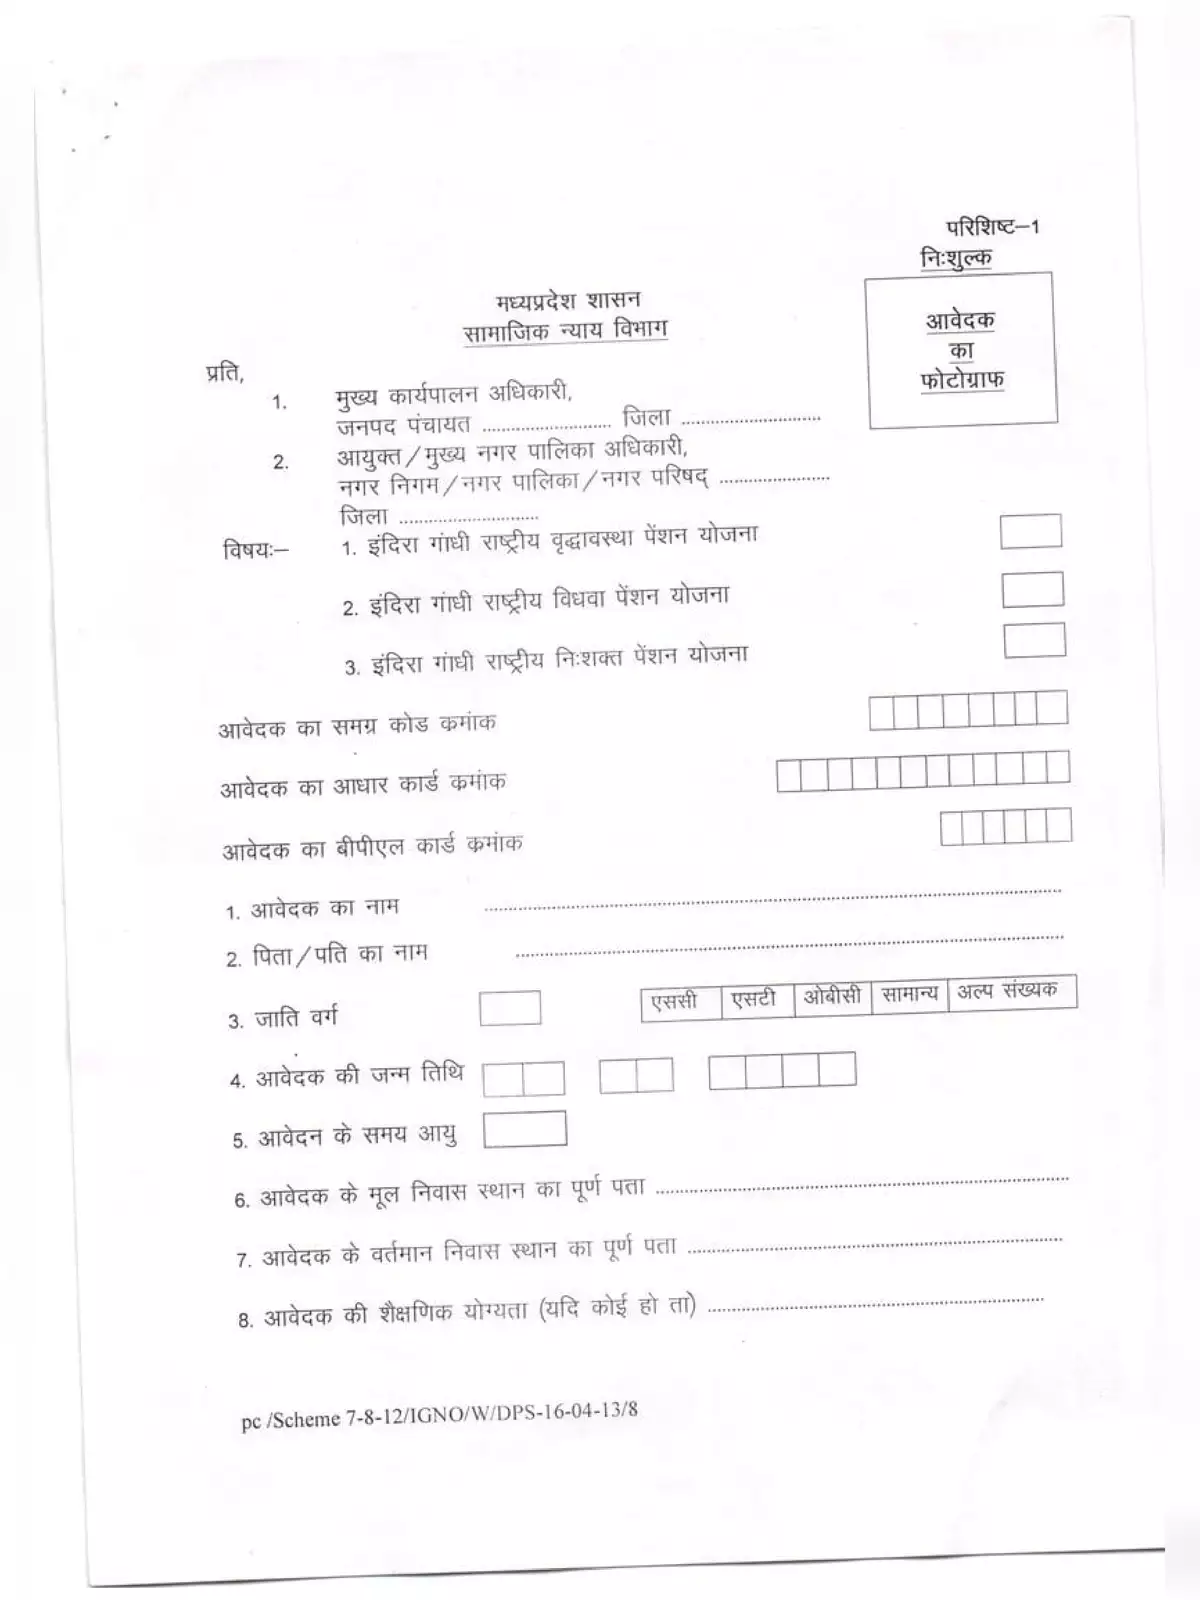 Indira Gandhi National Widow Pension Scheme Application Form Madhya Pradesh